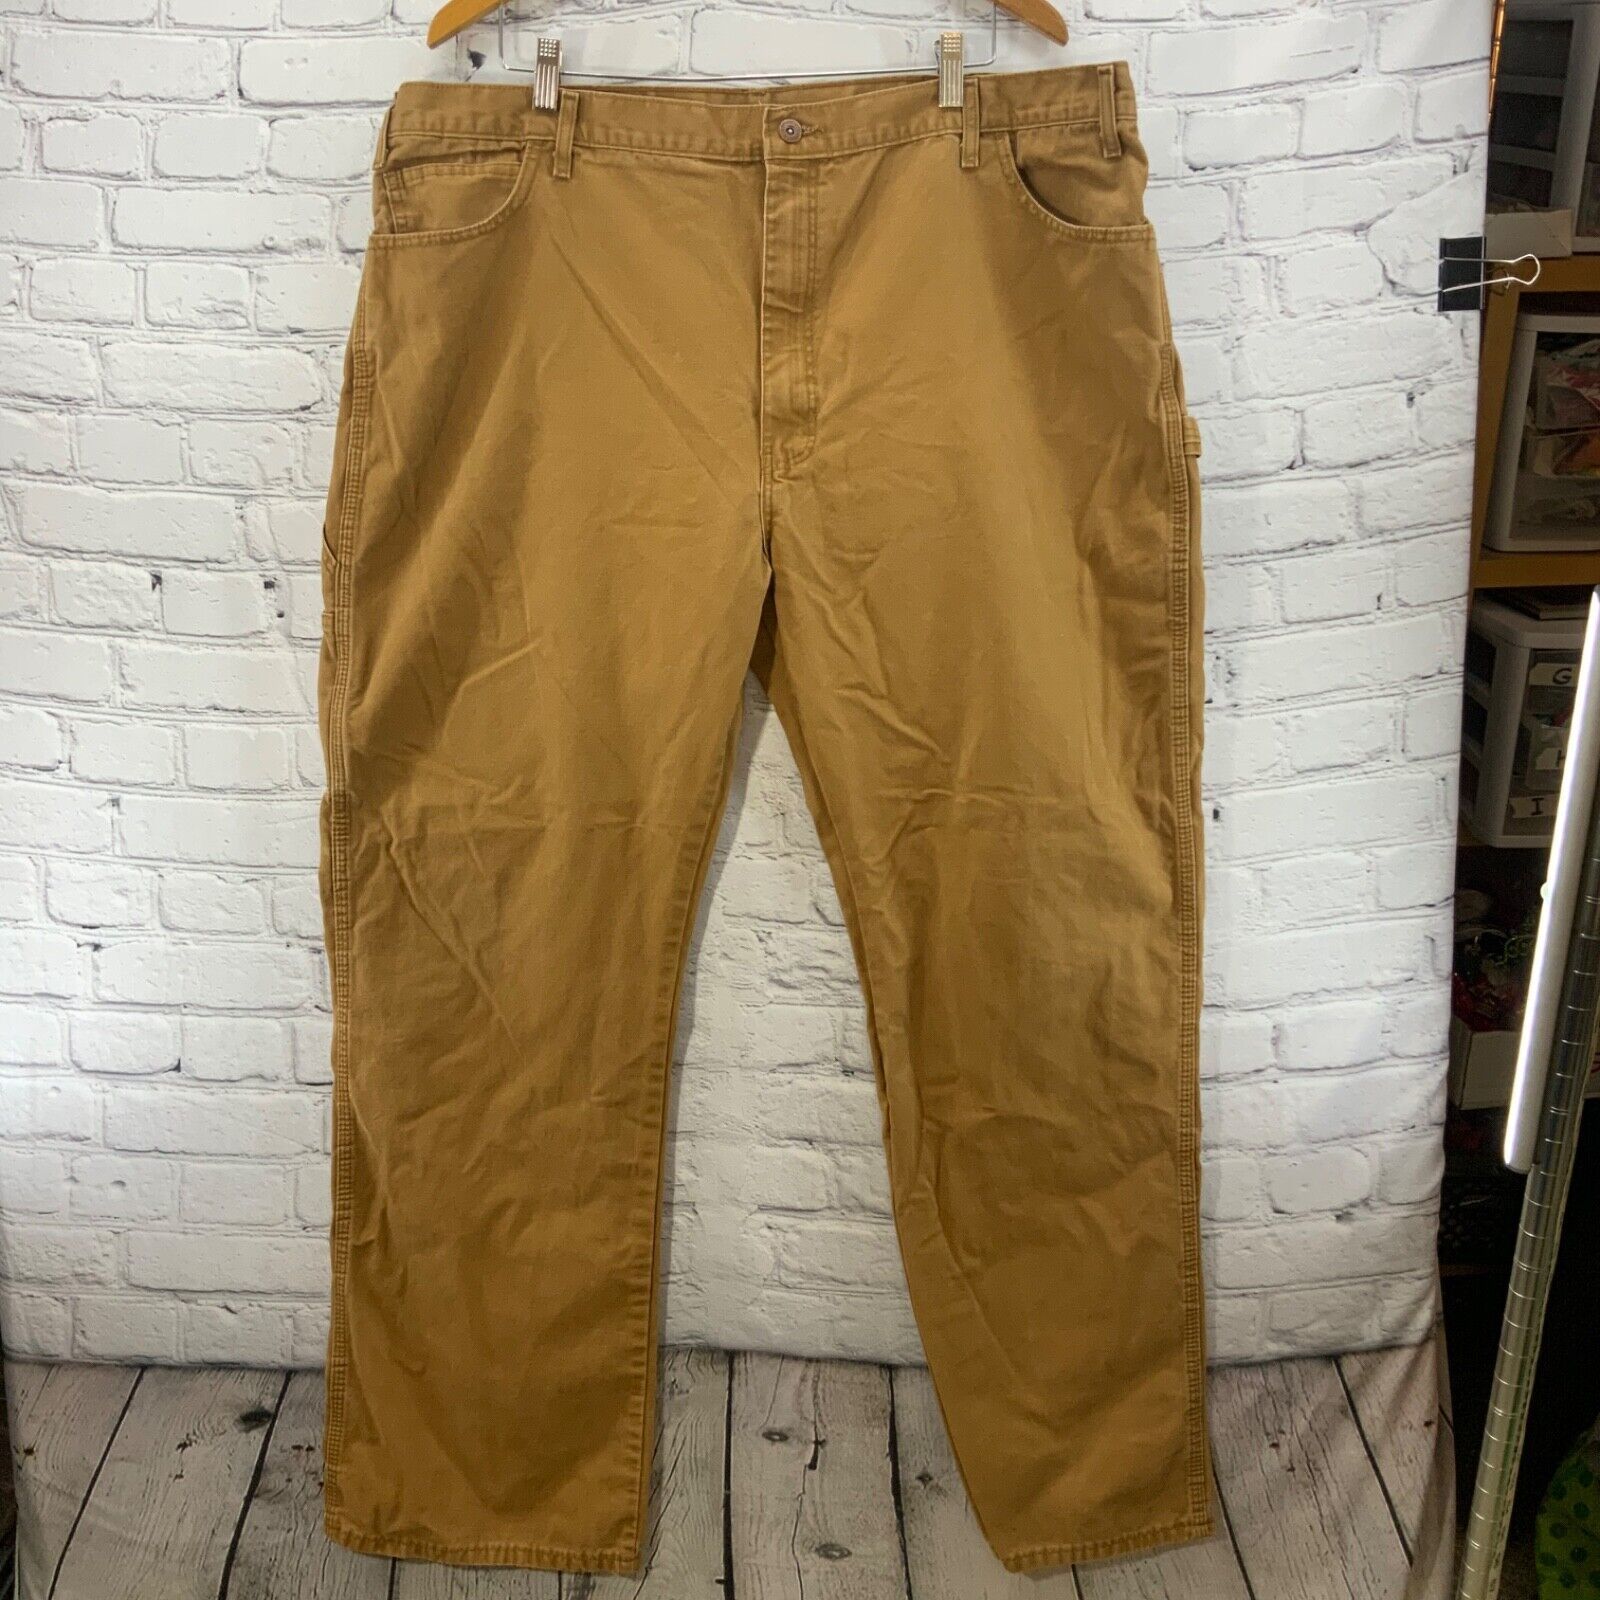 Primary image for Dickies Pants Mens Sz 42 x 32 Khaki Beige Burnt Yellow